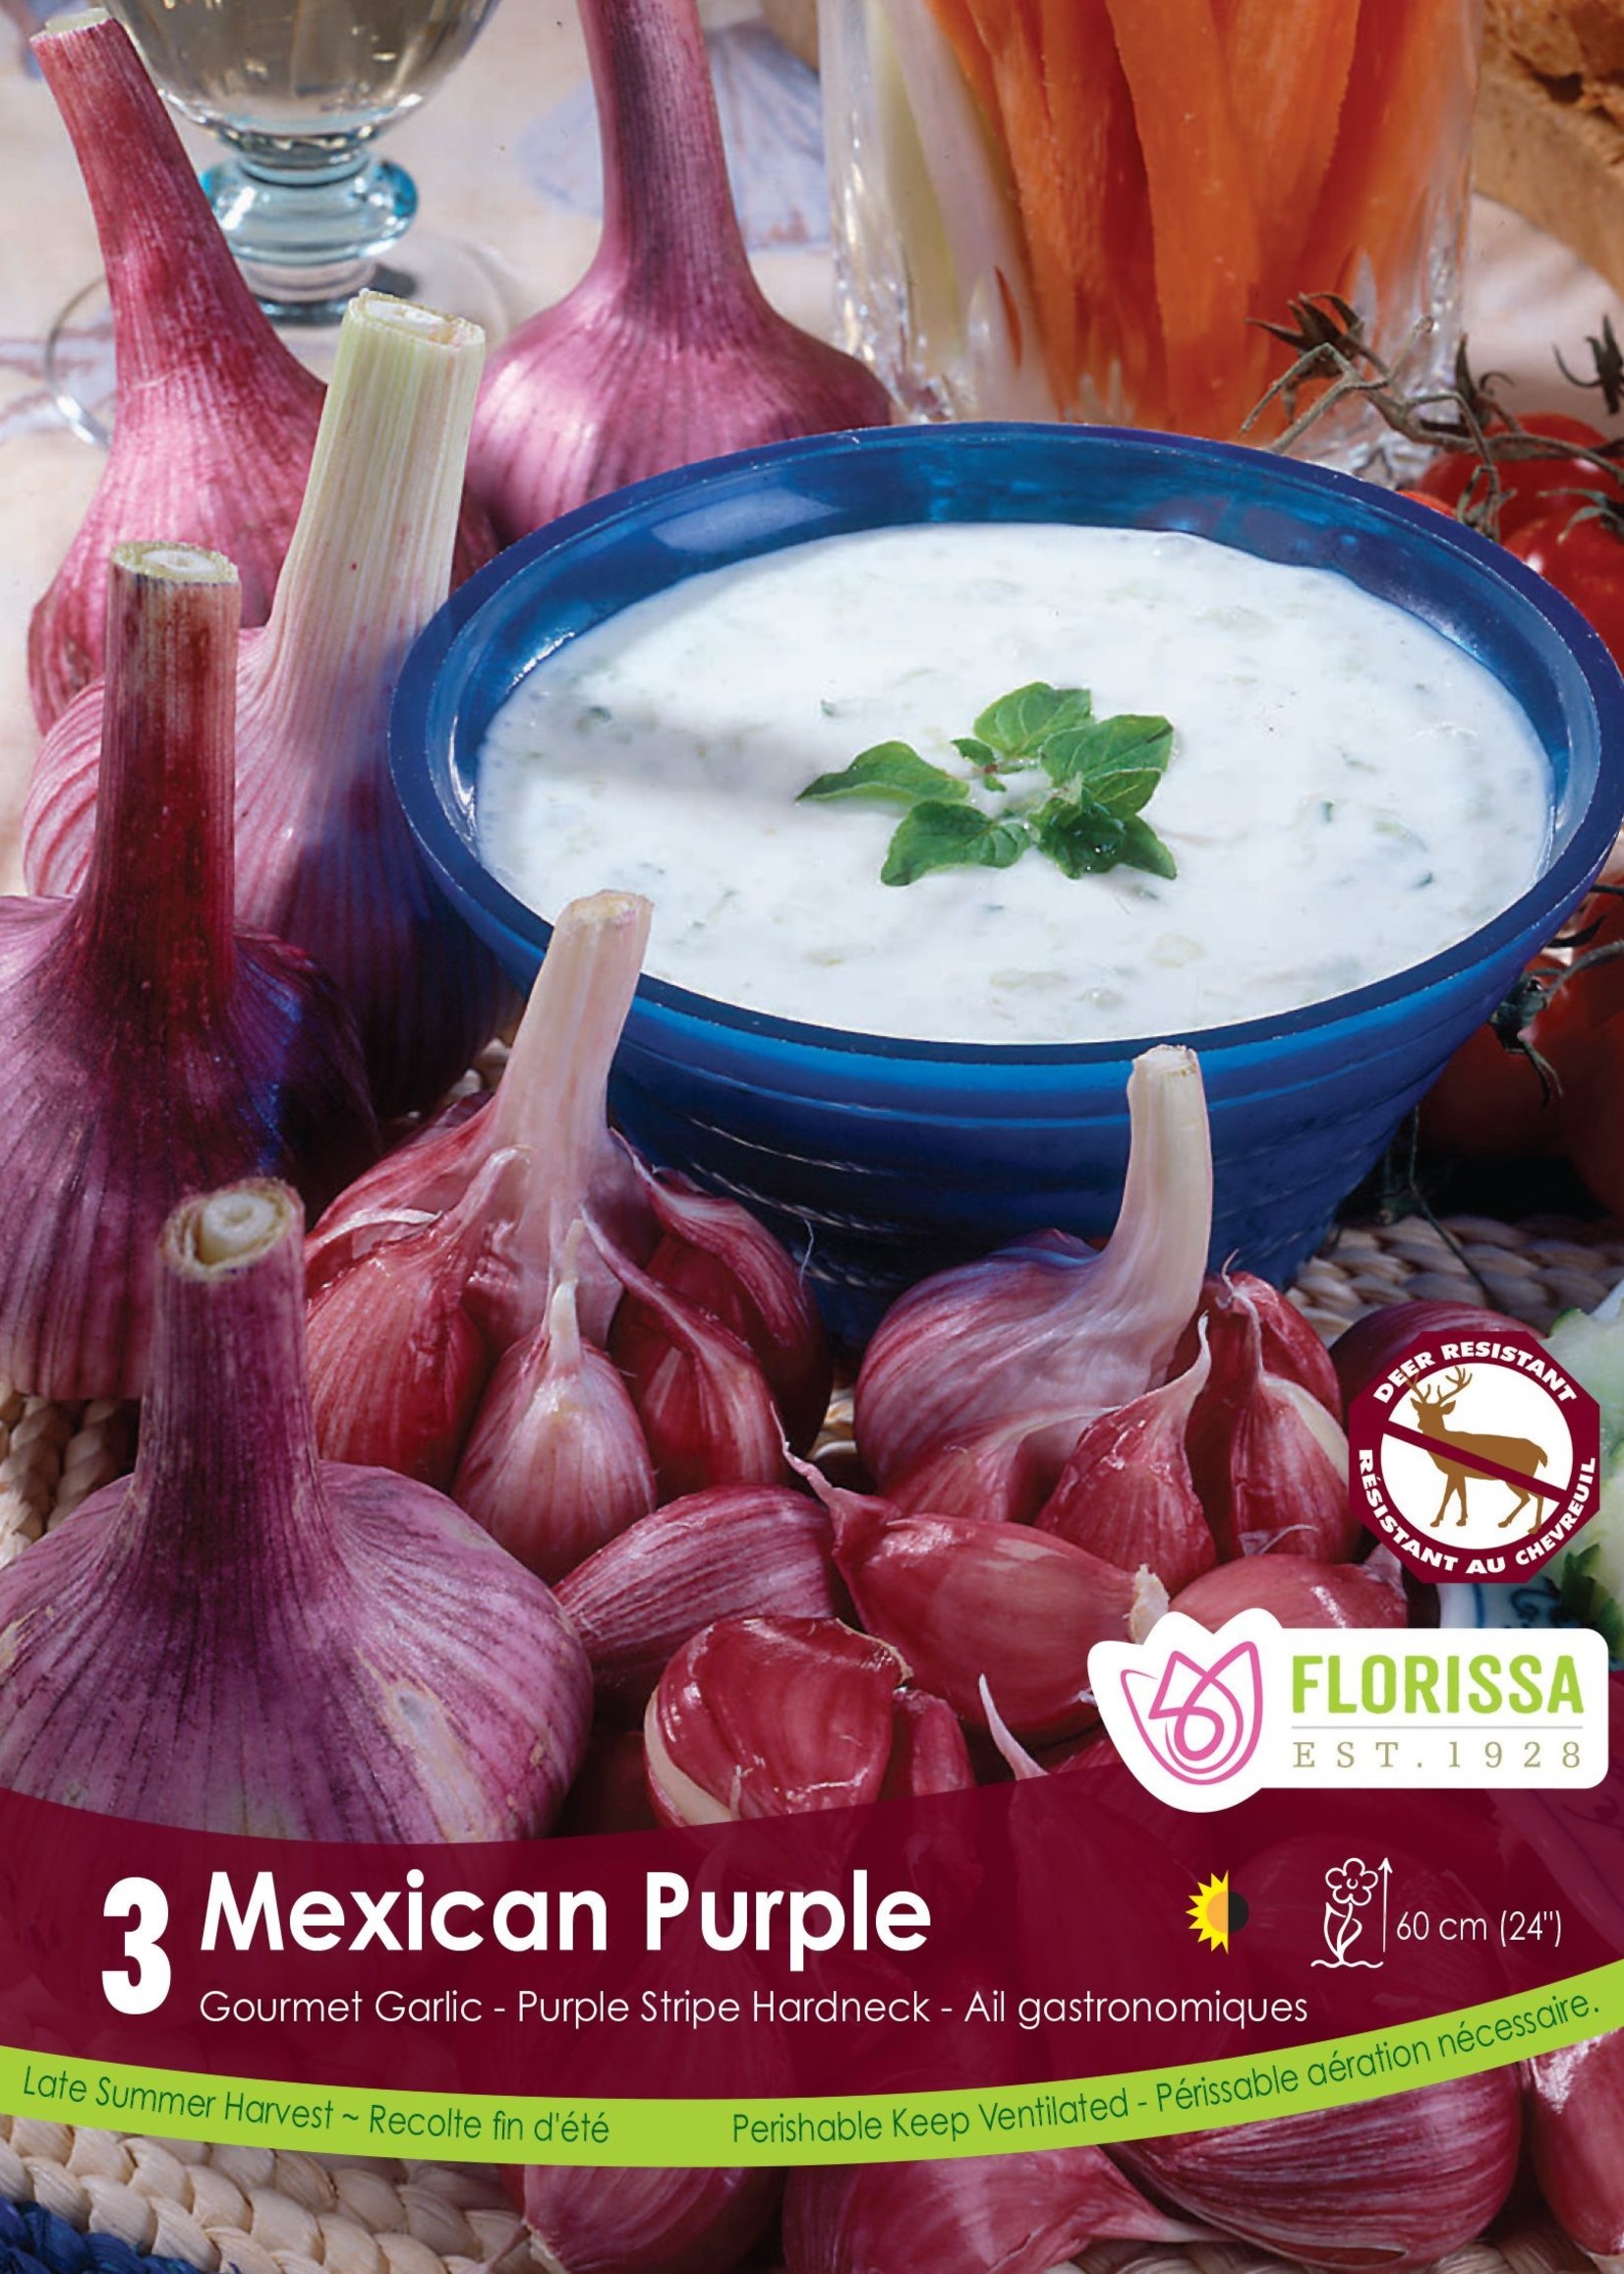 Florissa Mexican Purple Garlic 3/pkg